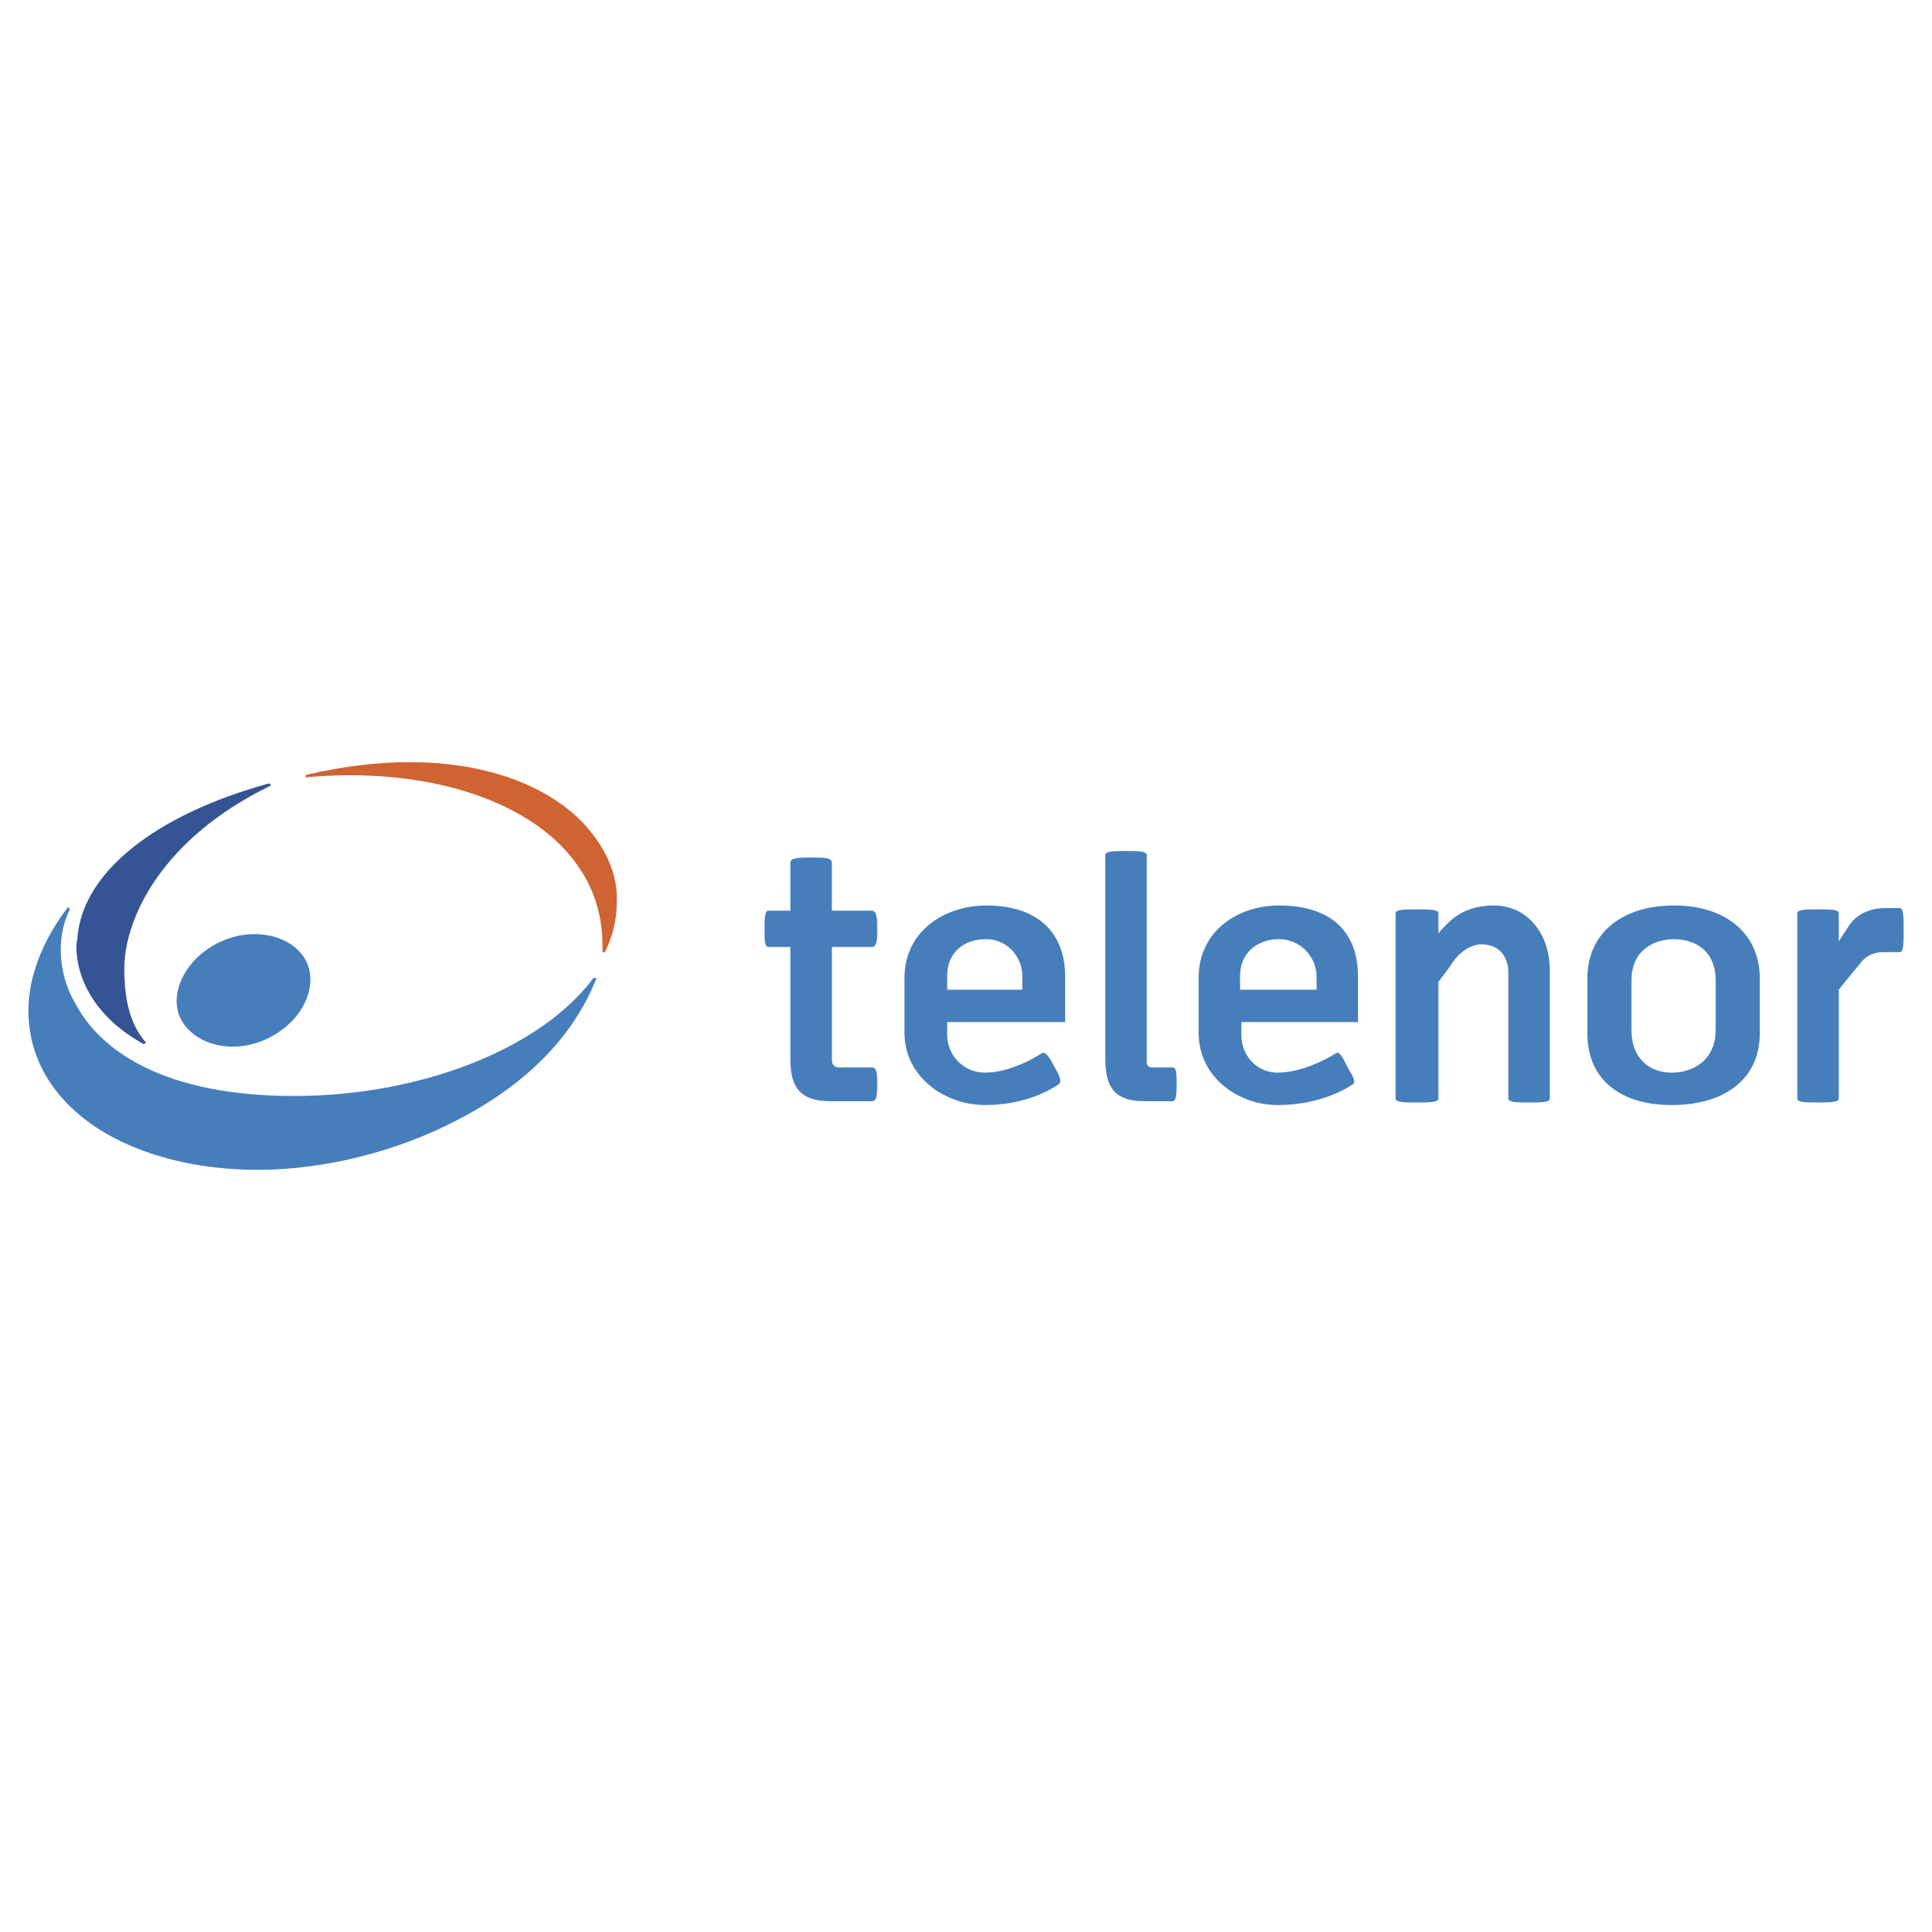 Telenor Logo - Telenor Logo PNG Transparent & SVG Vector - Freebie Supply